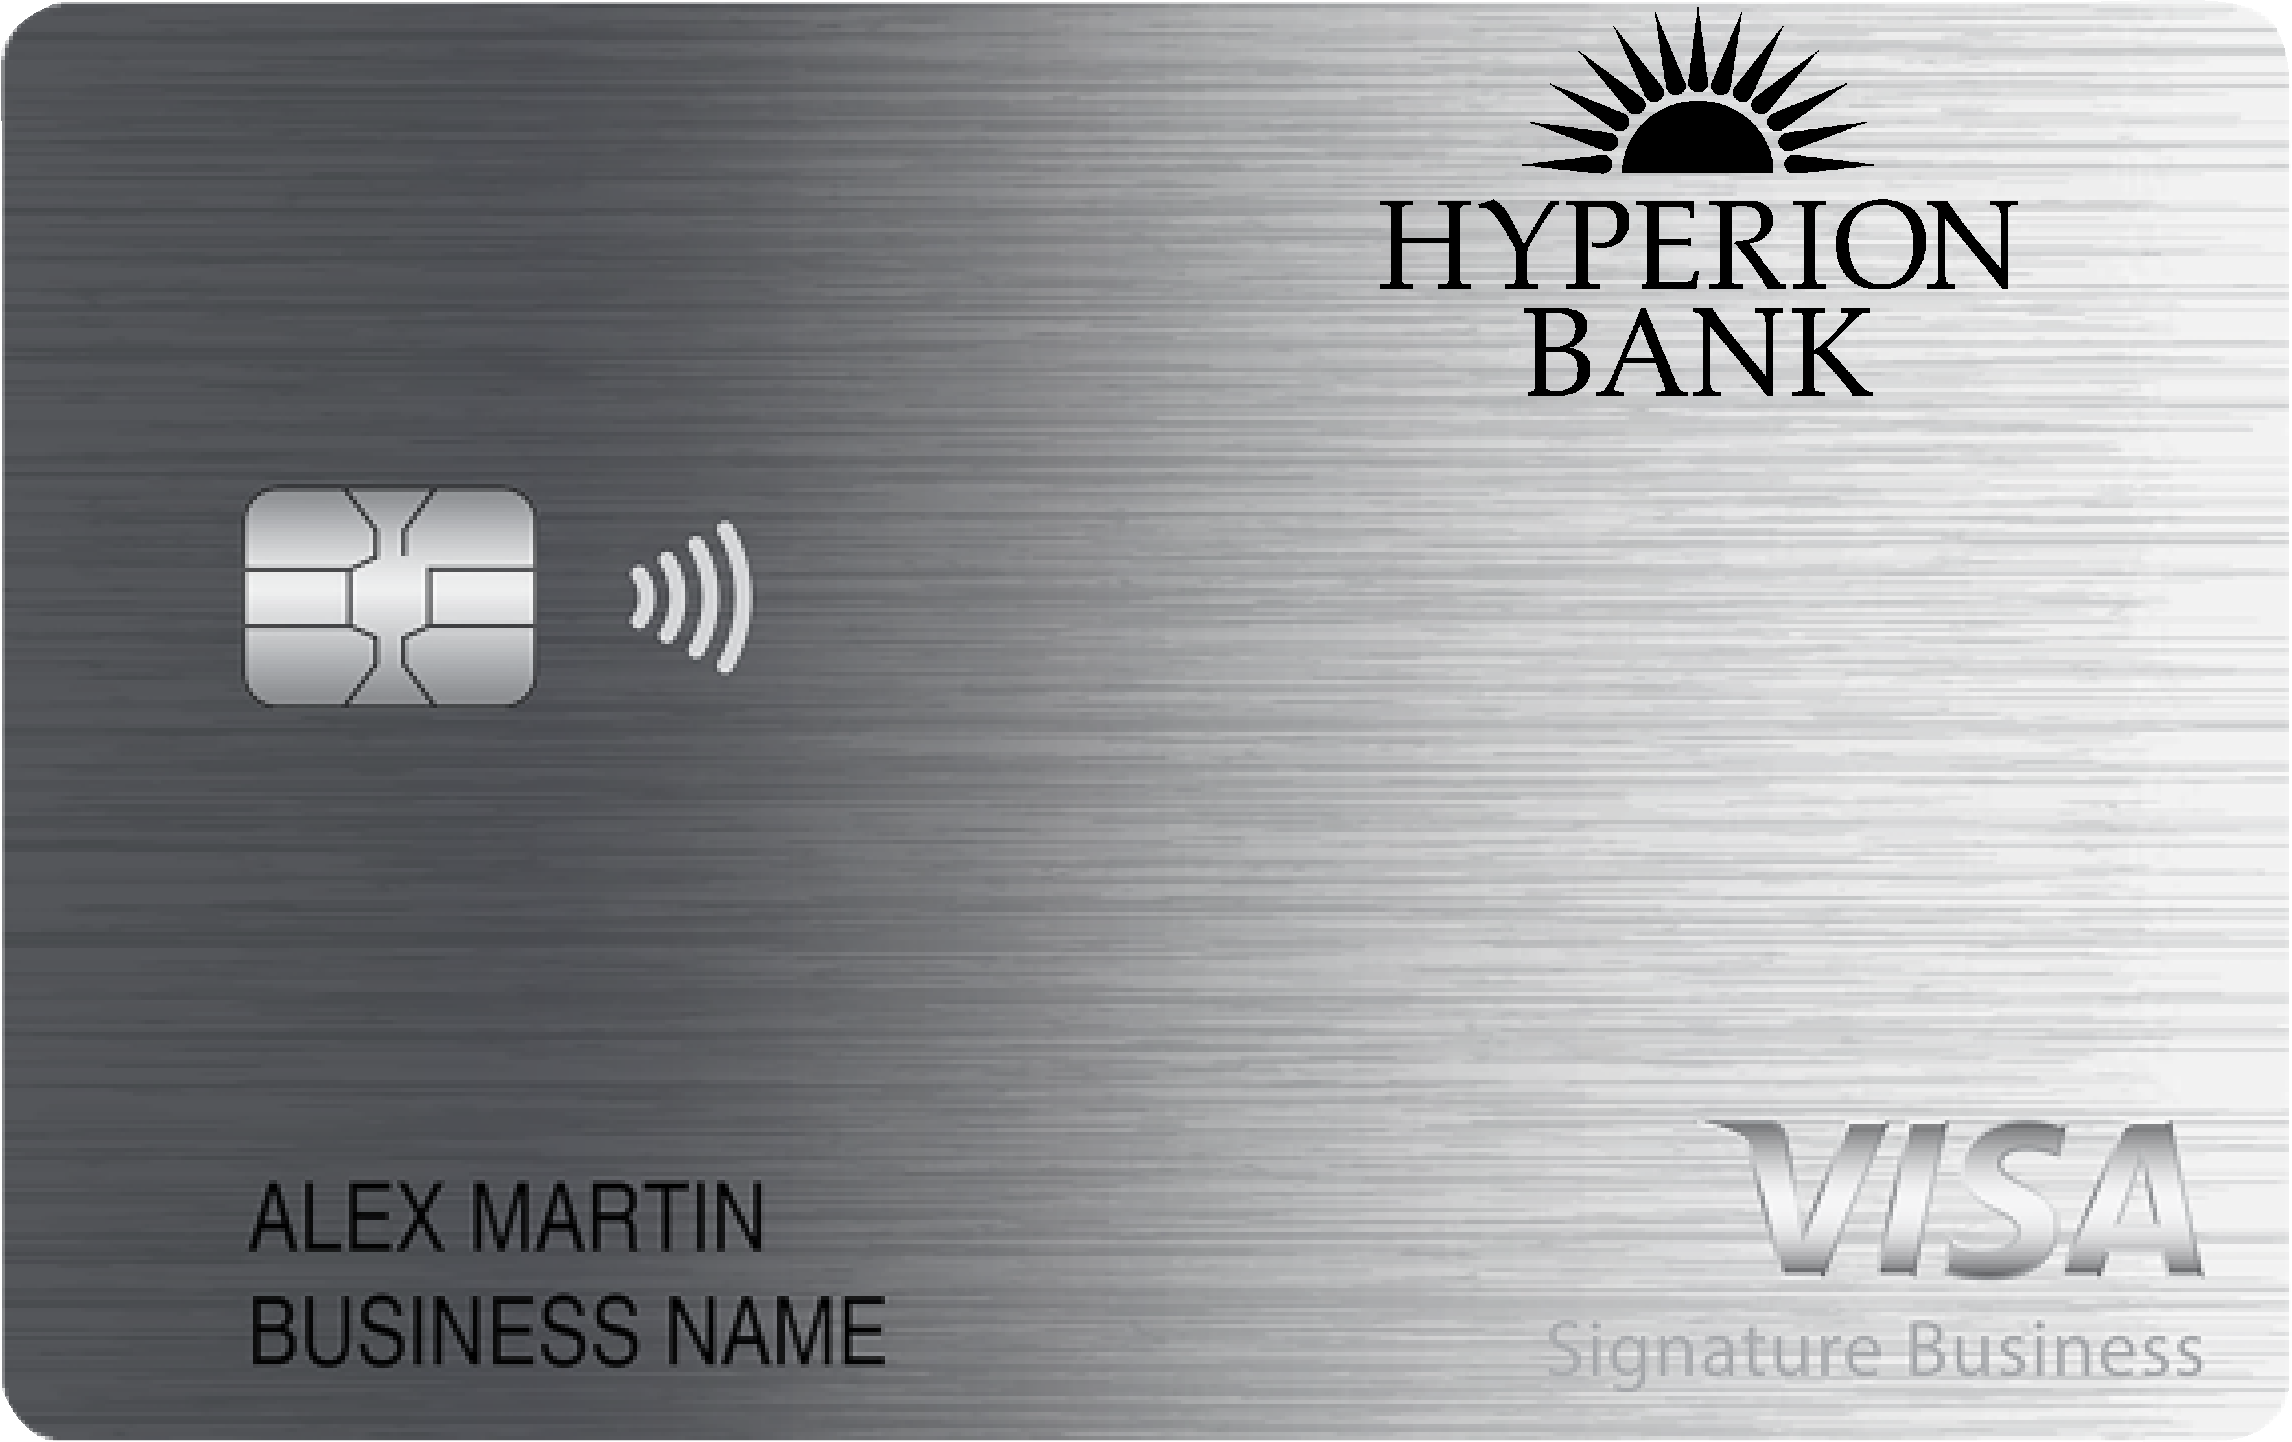 Hyperion Bank Smart Business Rewards Card